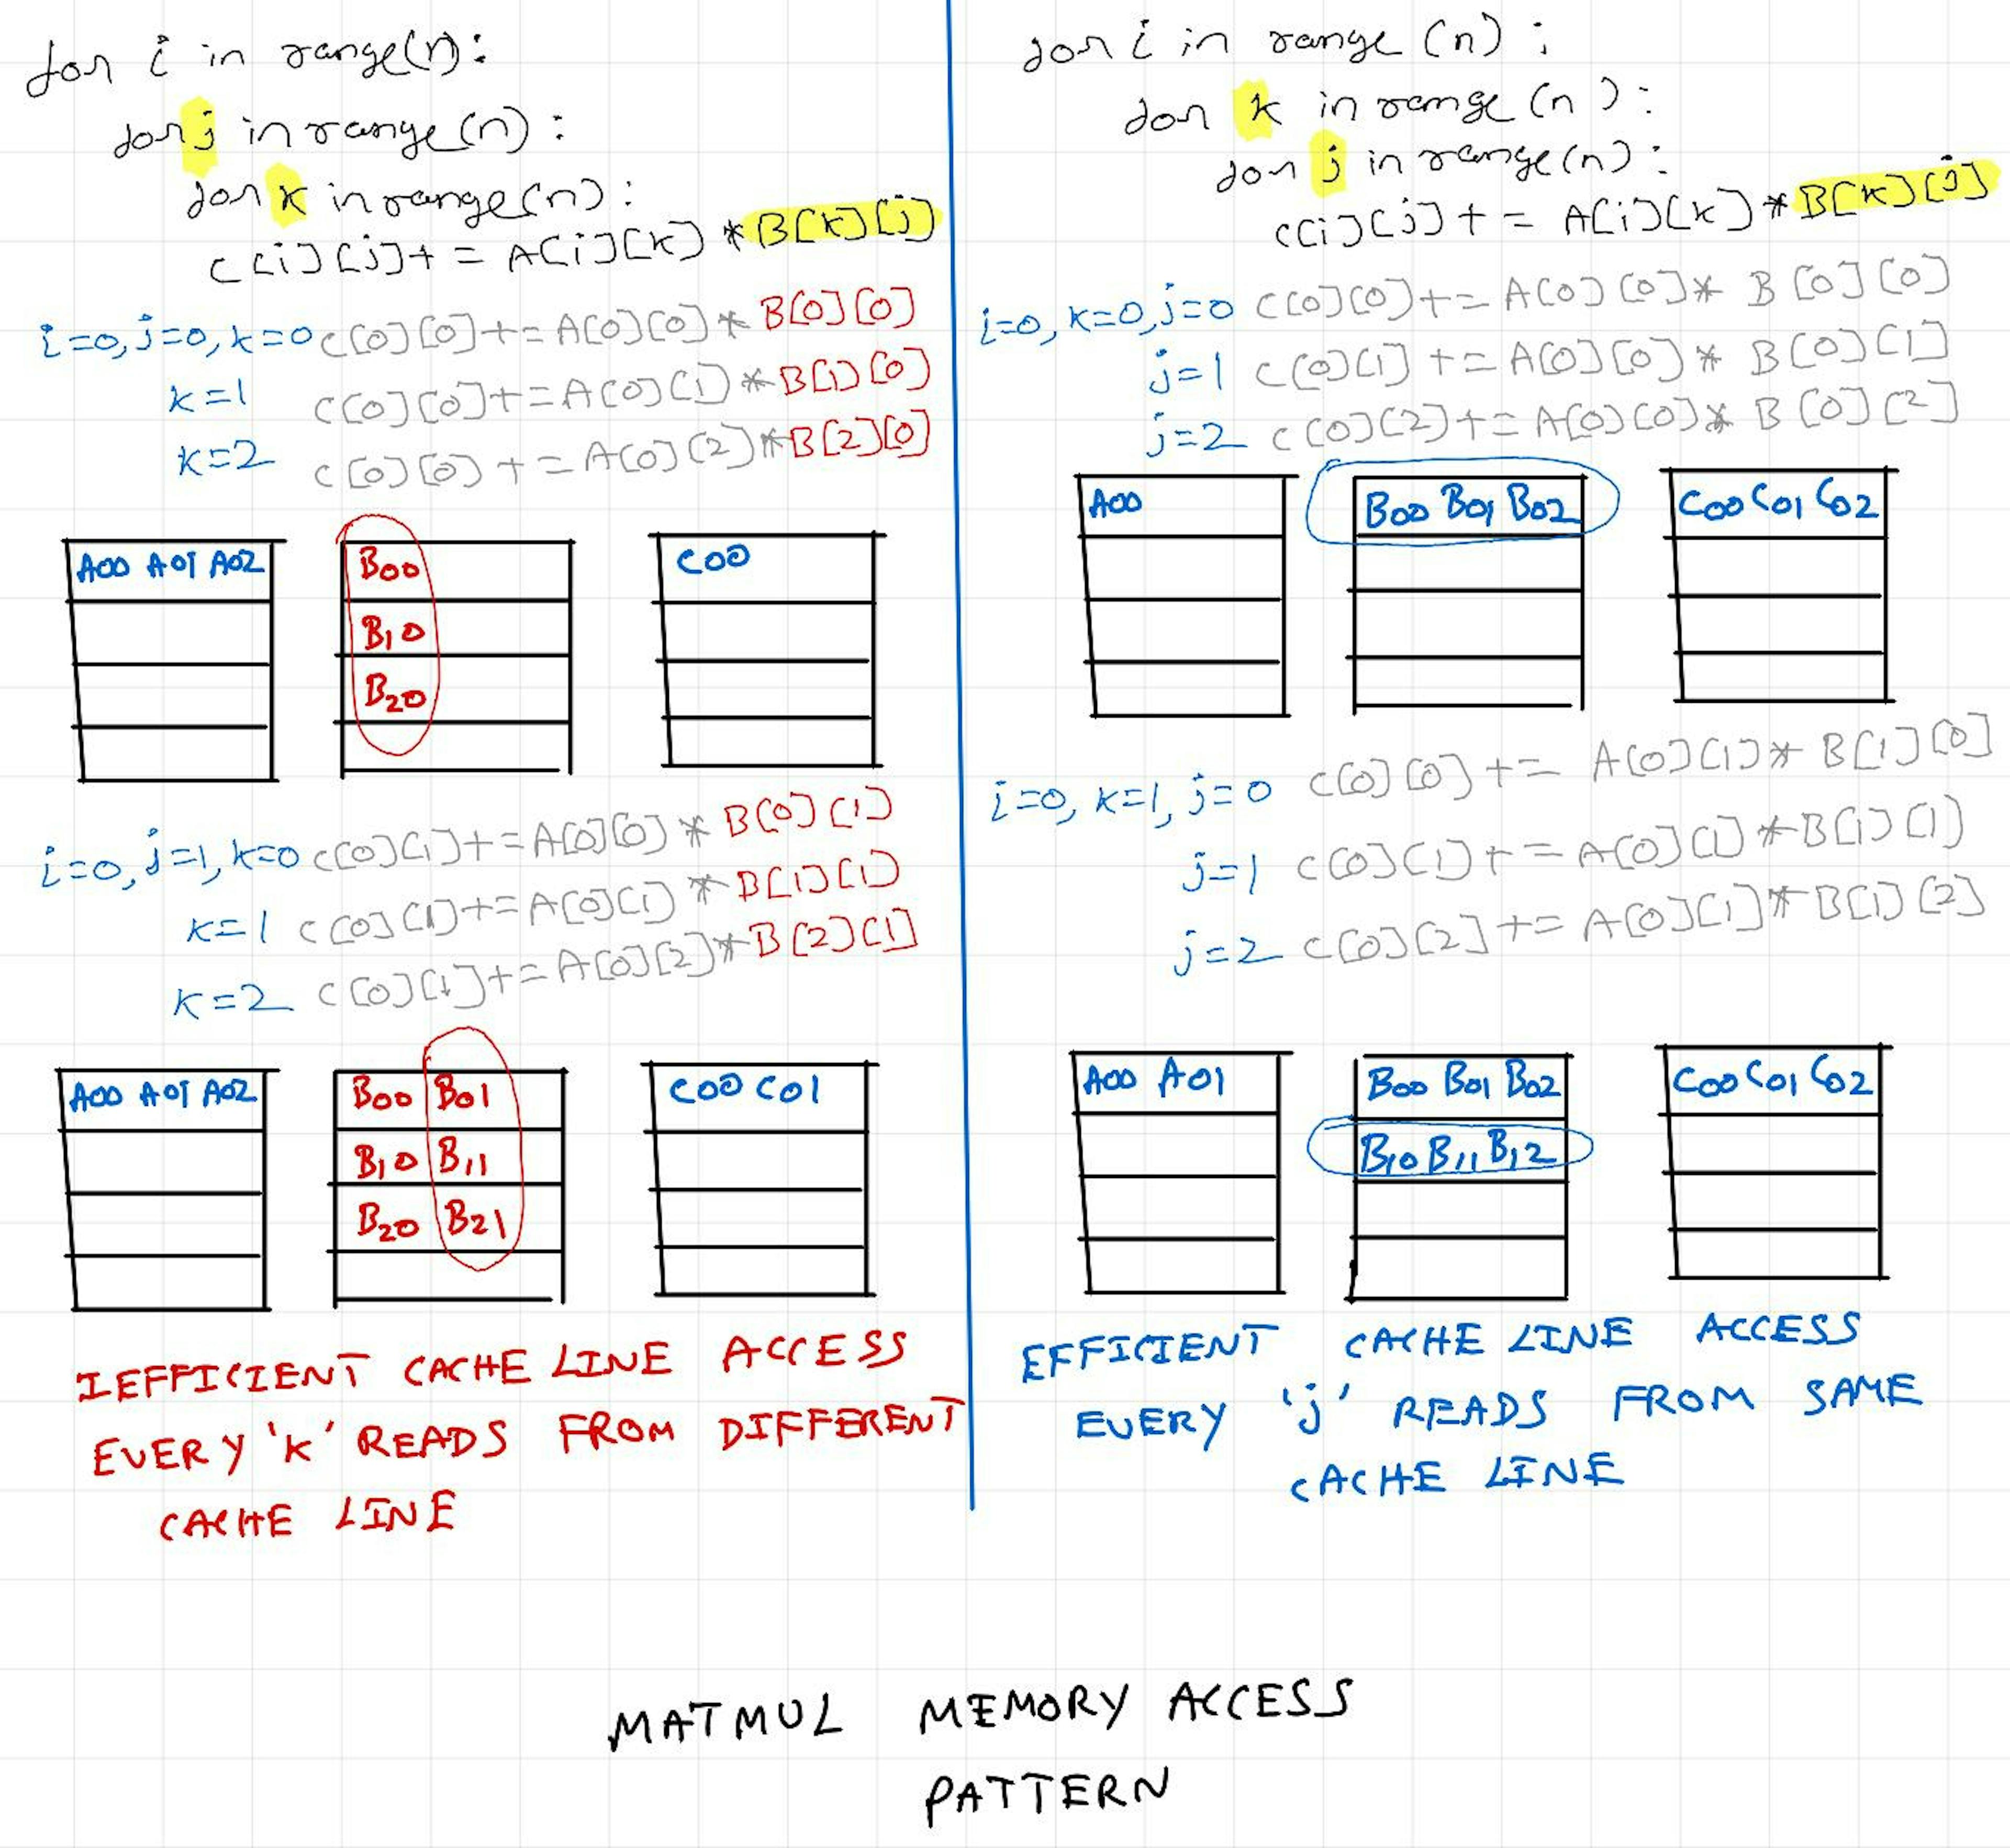 Matrix multiplication memory access pattern